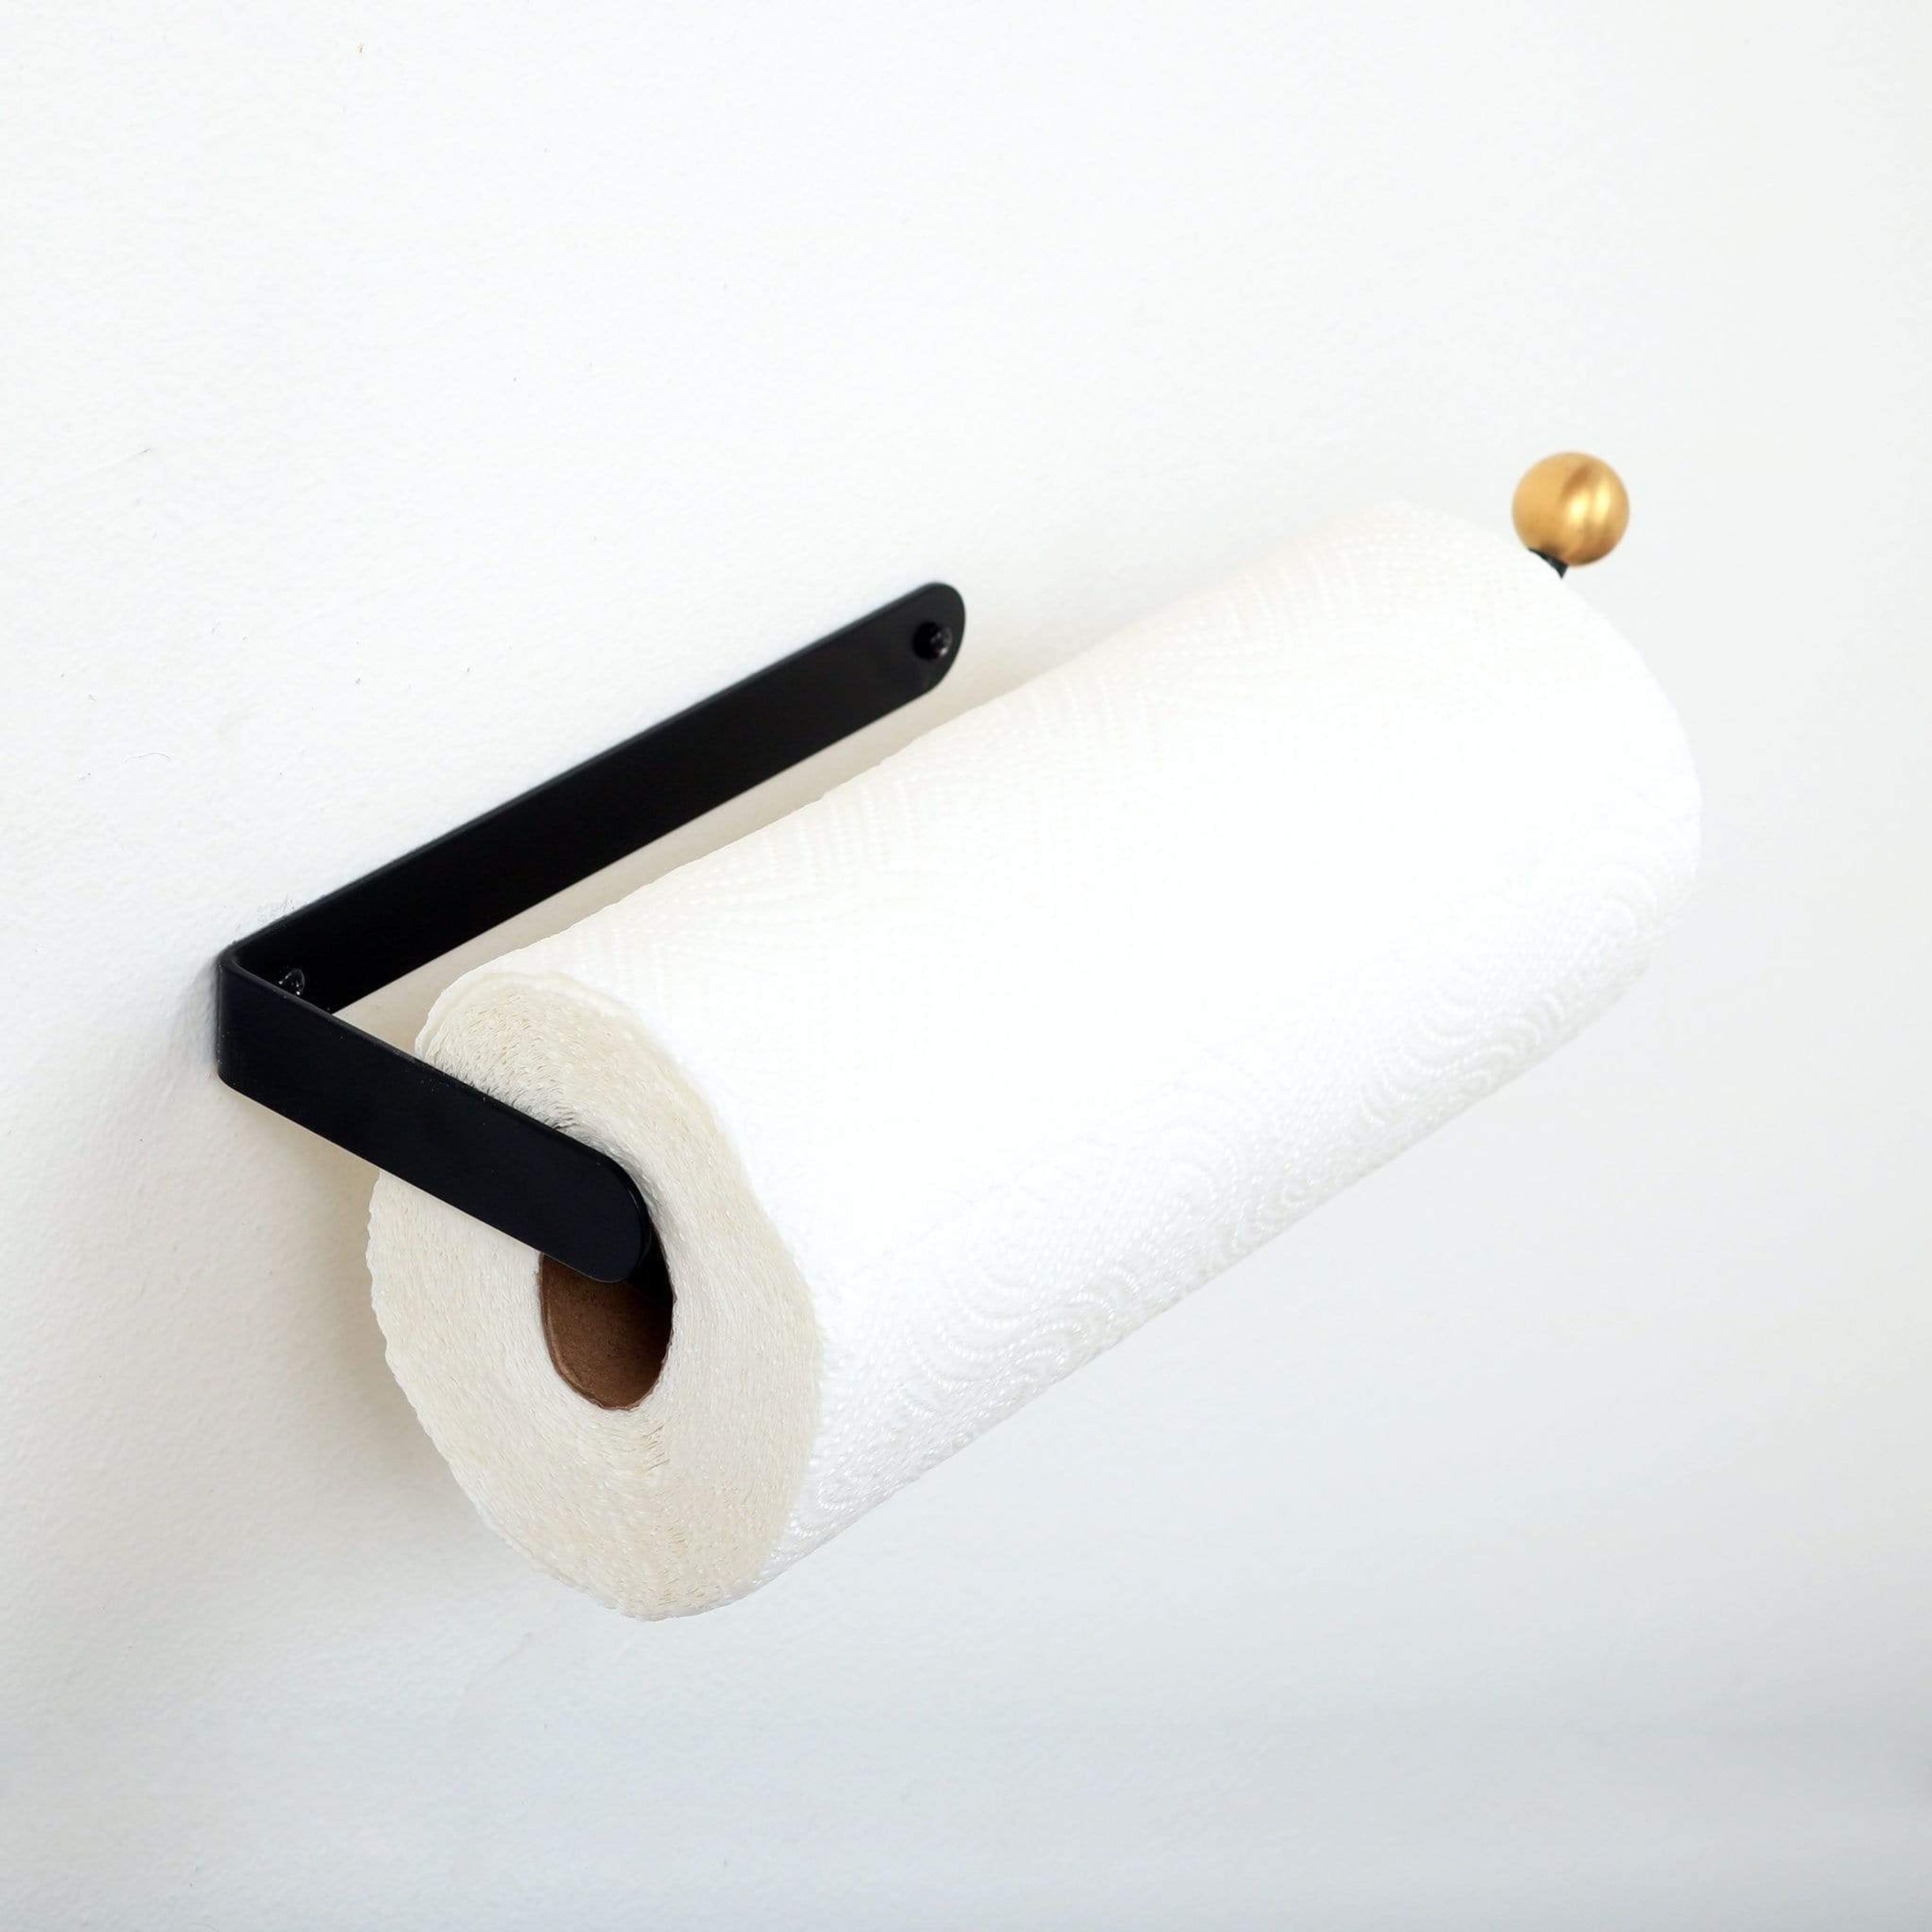 Hand towel holder